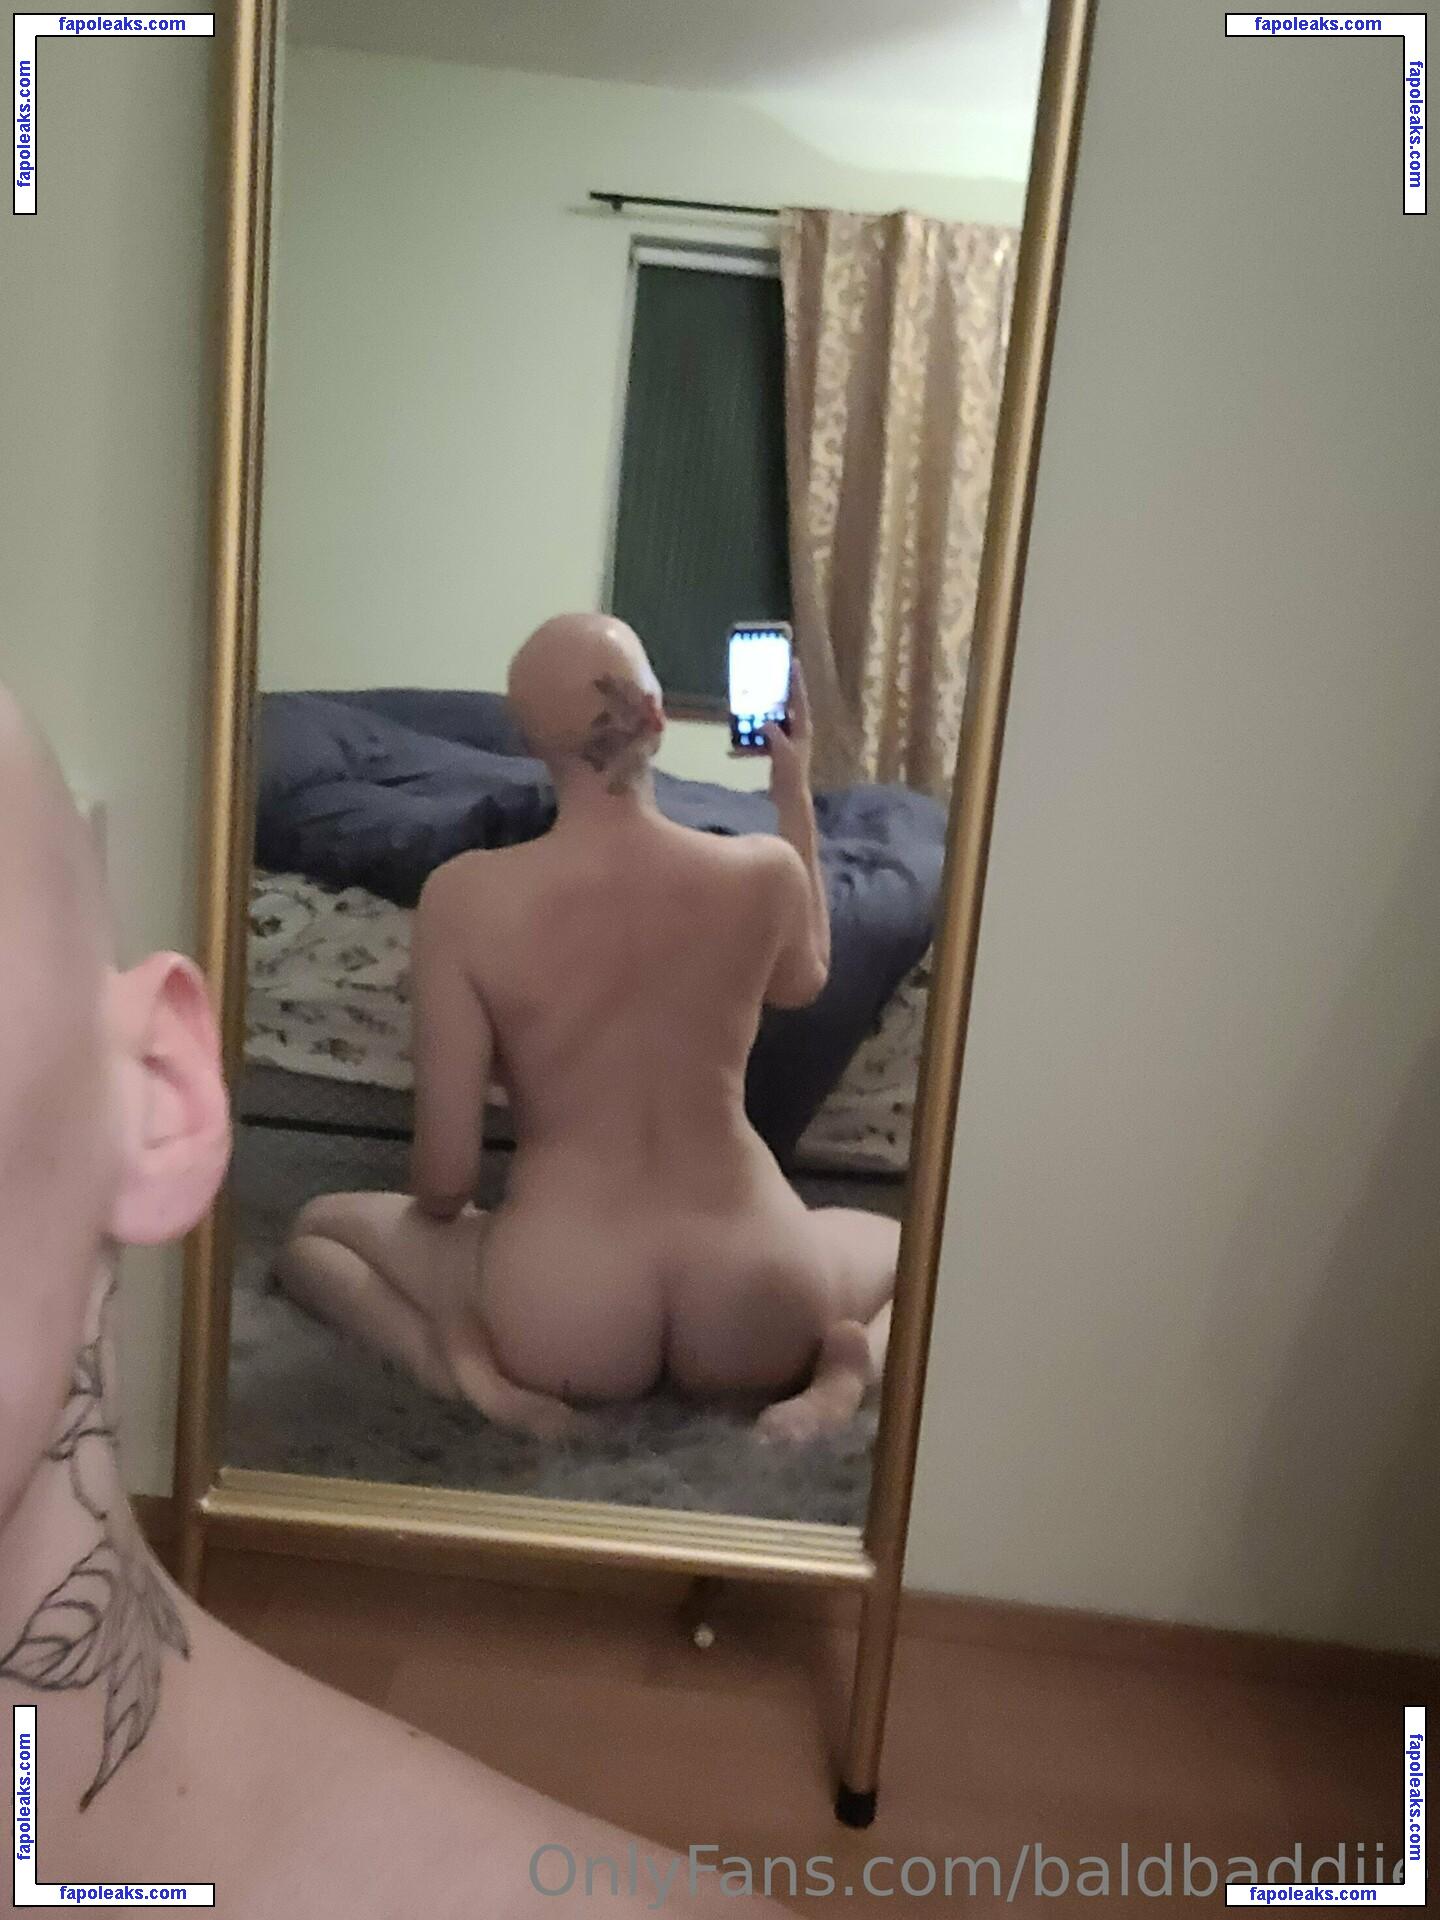 baldbaddiie / bald_baddie nude photo #0003 from OnlyFans